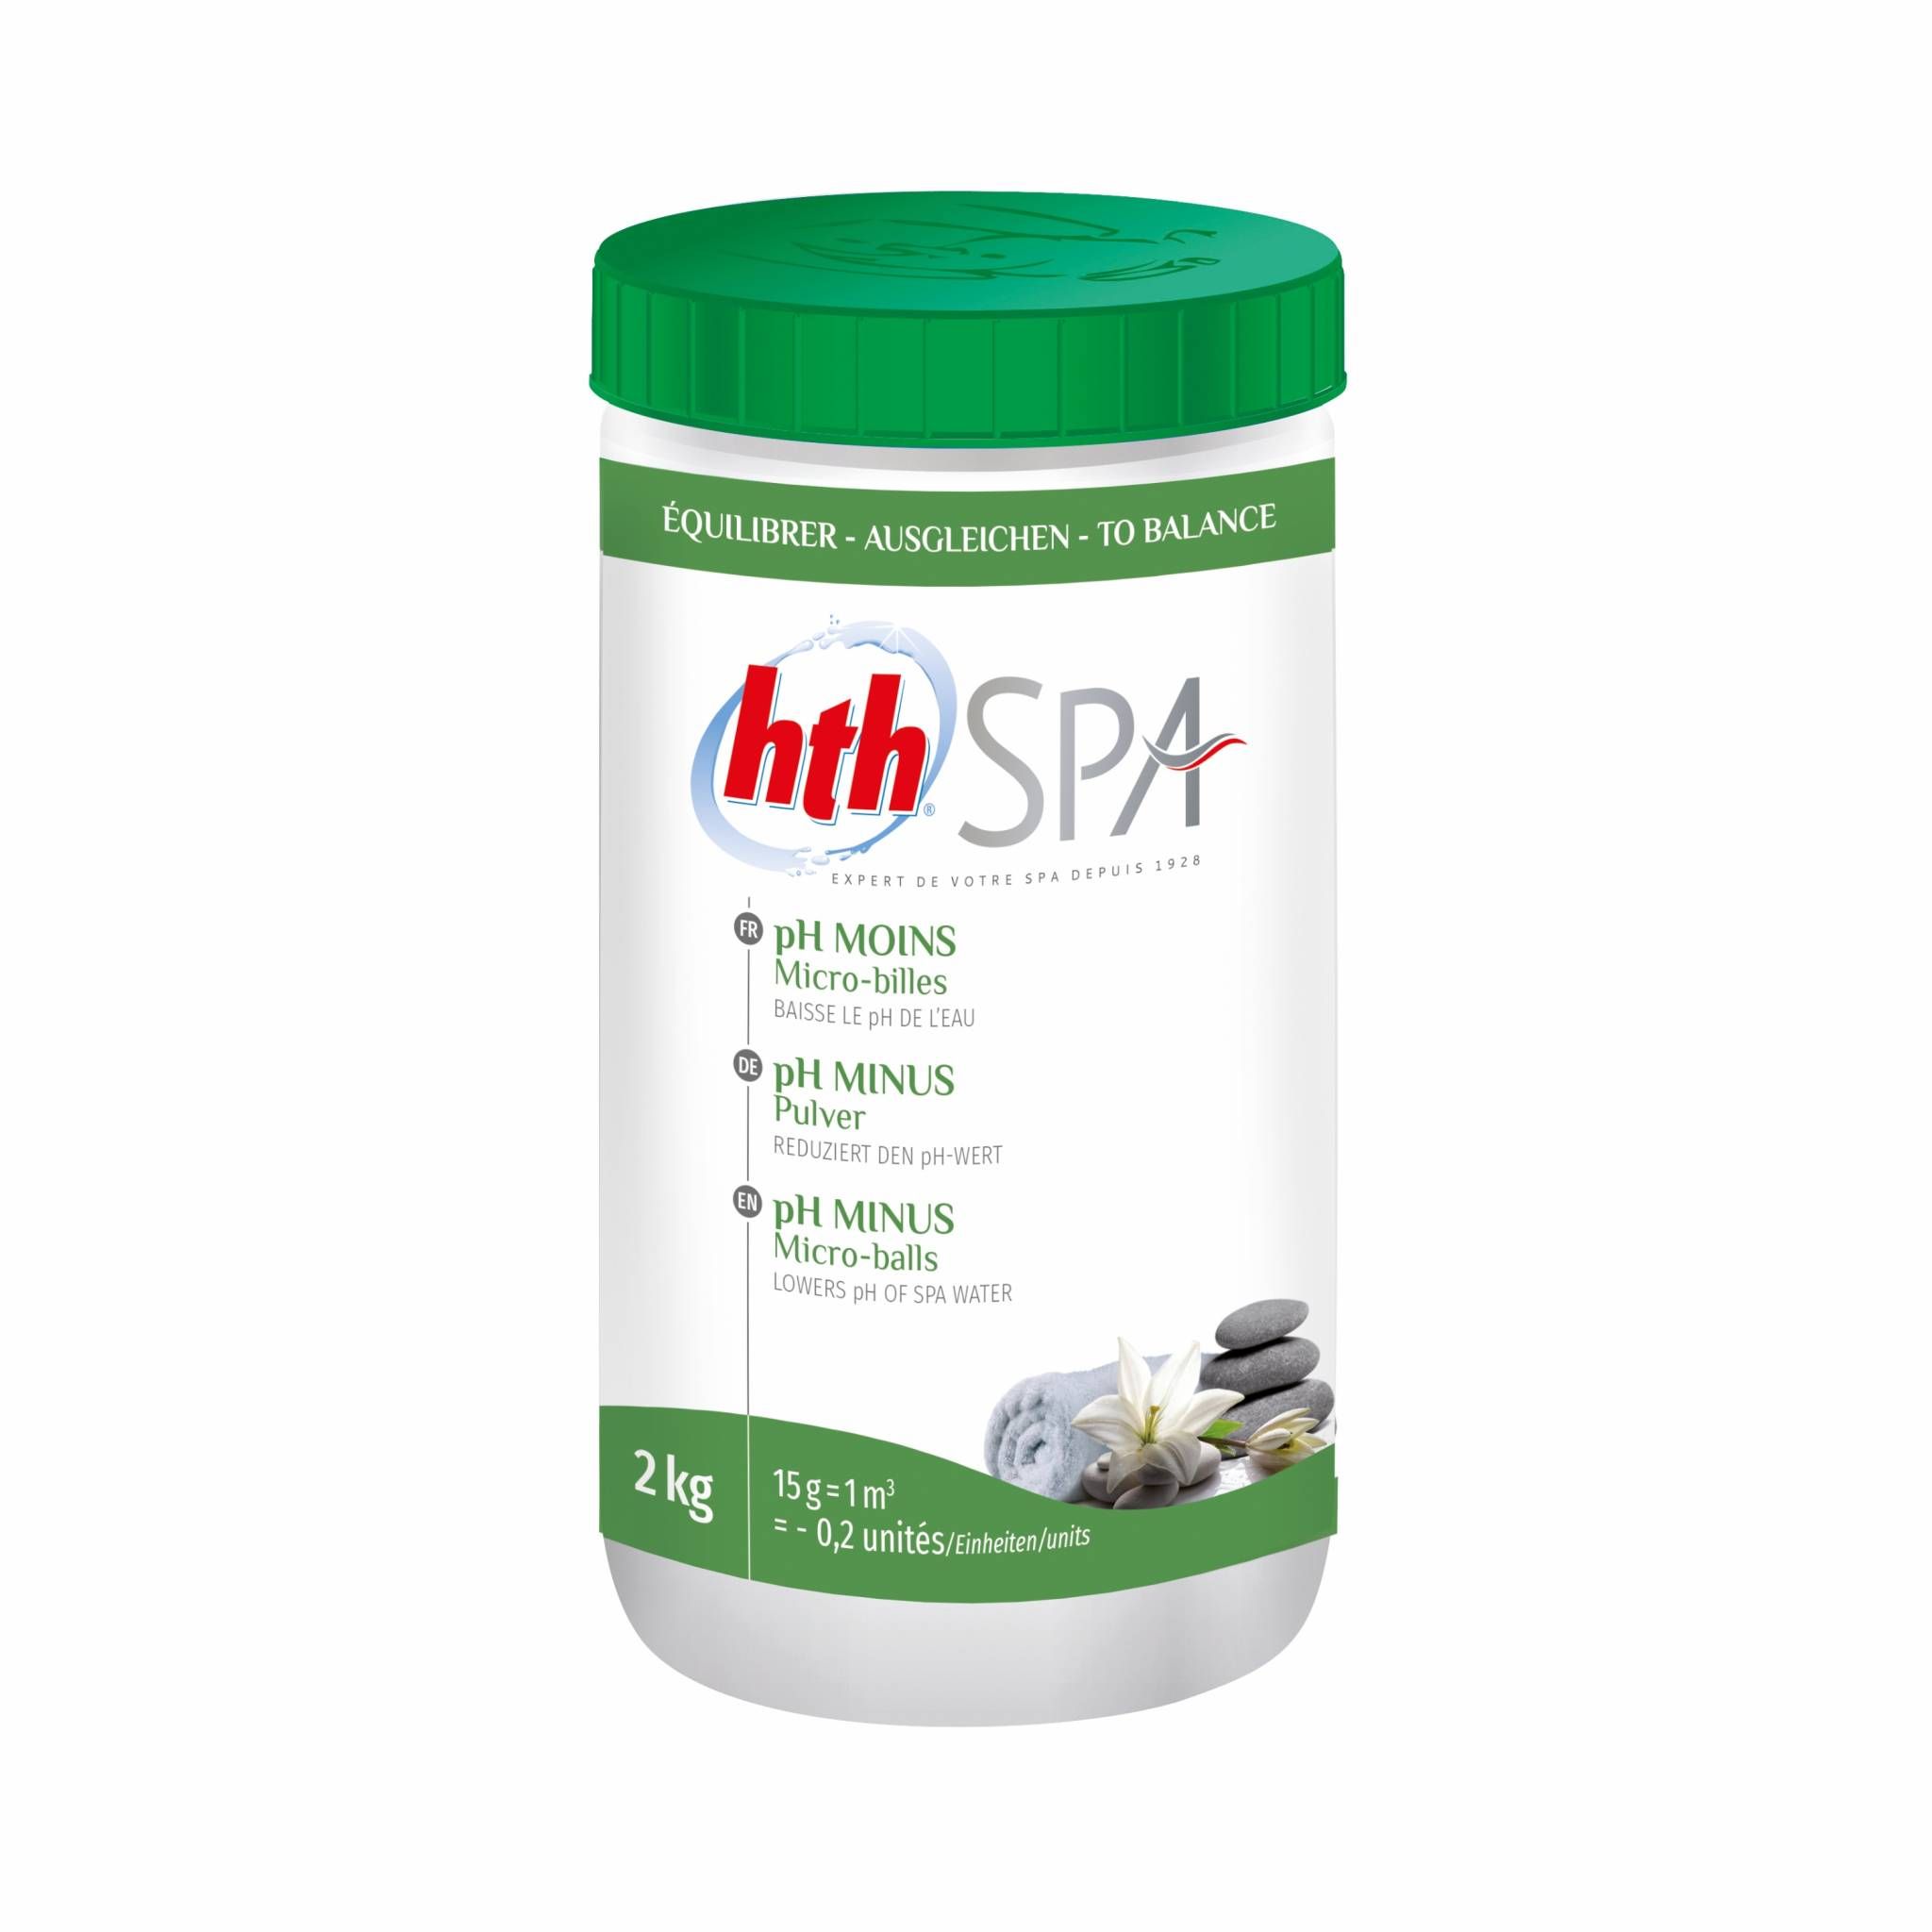 HTH SPA pH MOINS